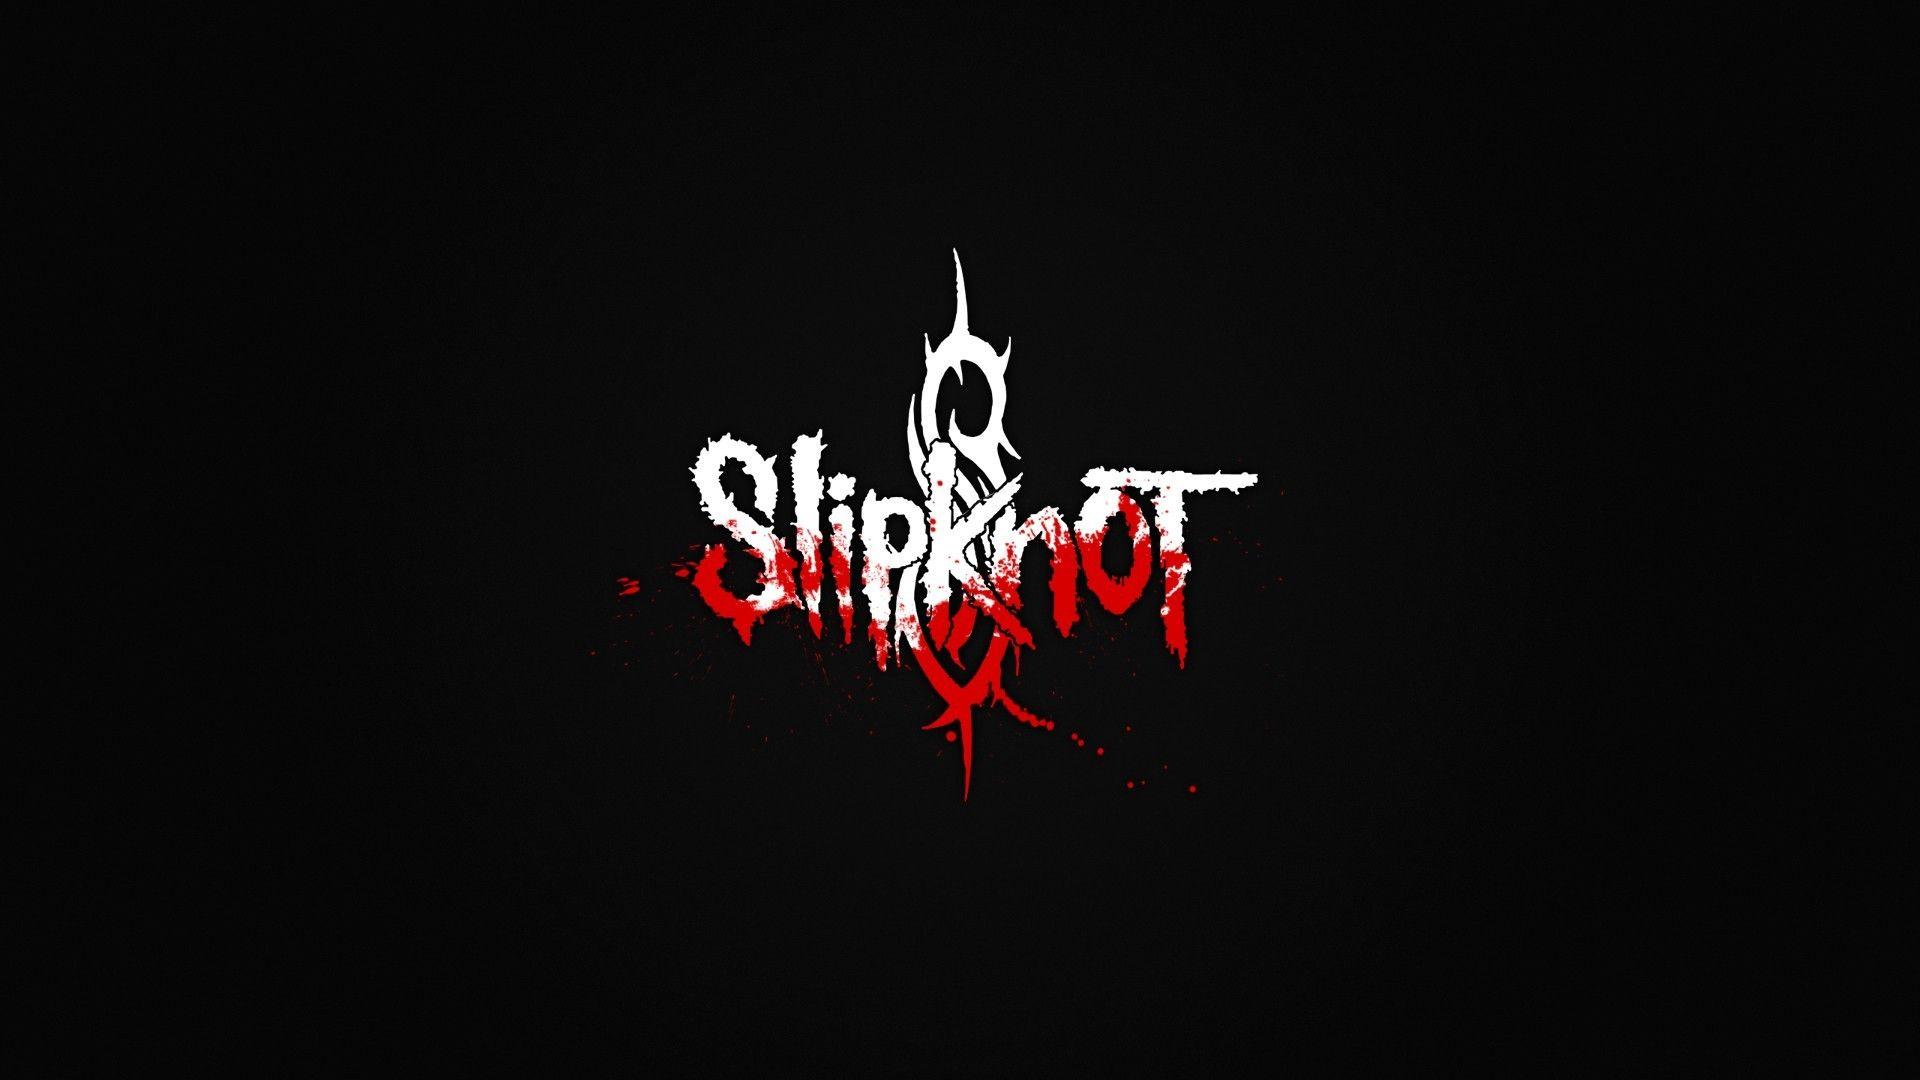 Slipknot Wallpaper, Picture, Image